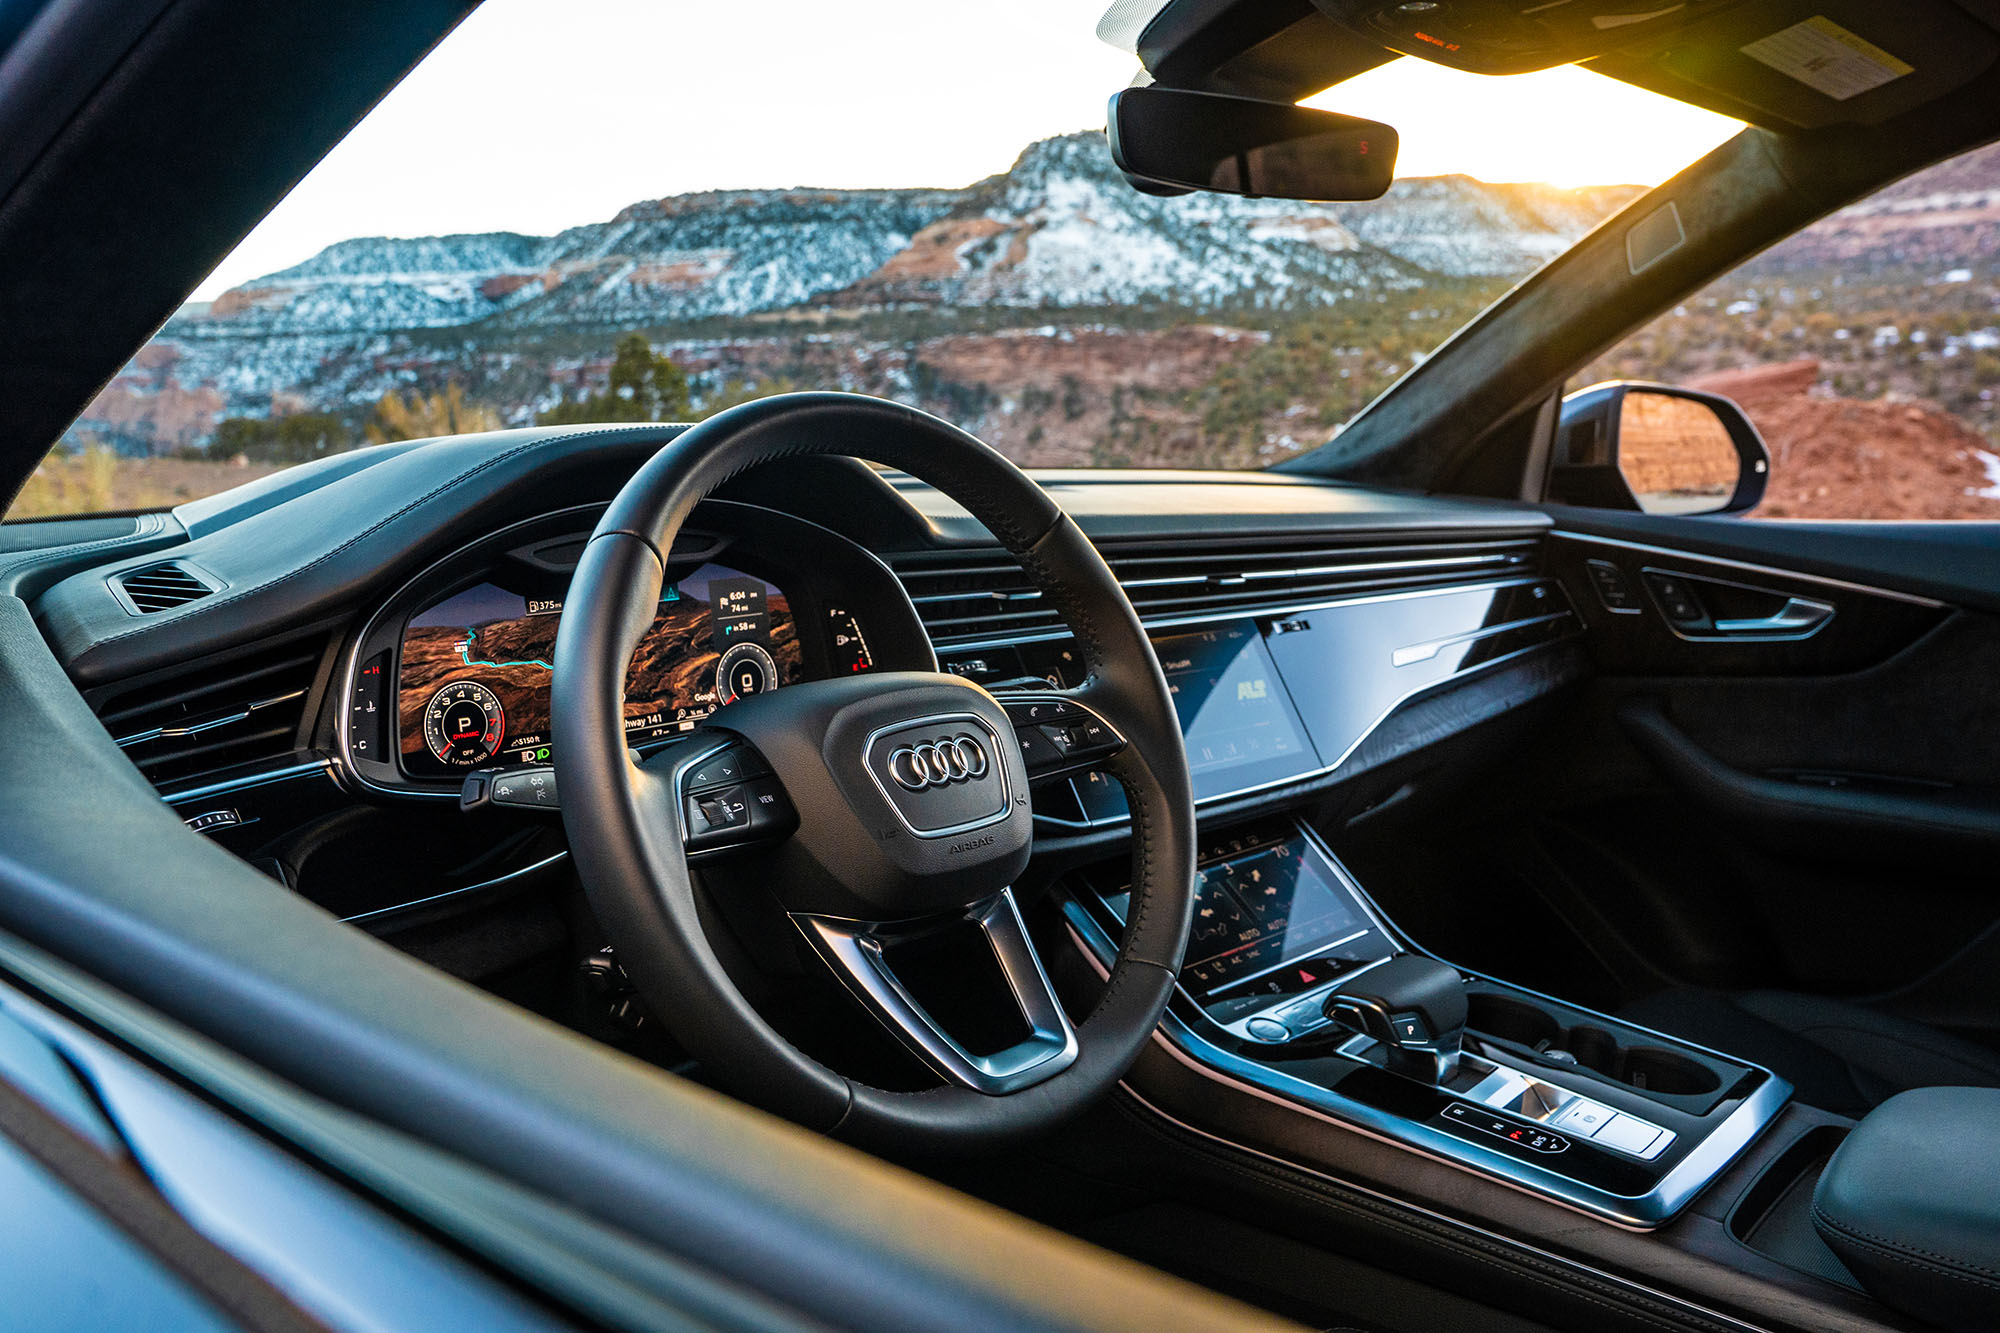 Audi Q8 interior, dashboard